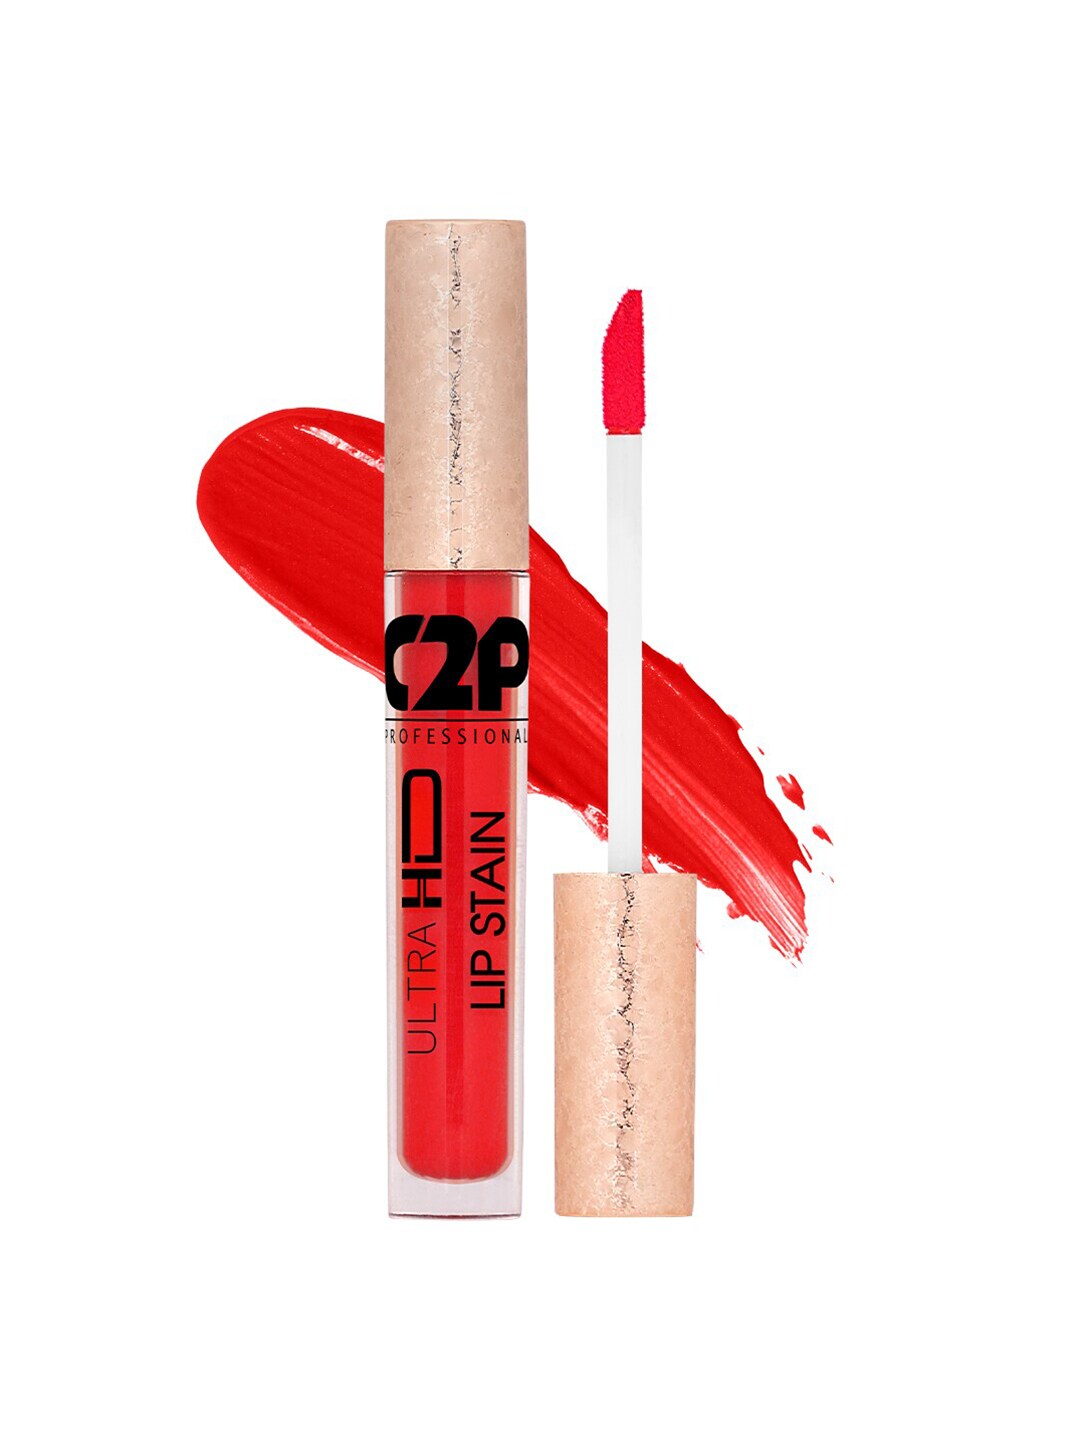 C2P PROFESSIONAL MAKEUP Lip Stain Liquid Lipstick - Runnin' The Lights 20 5 ml Price in India